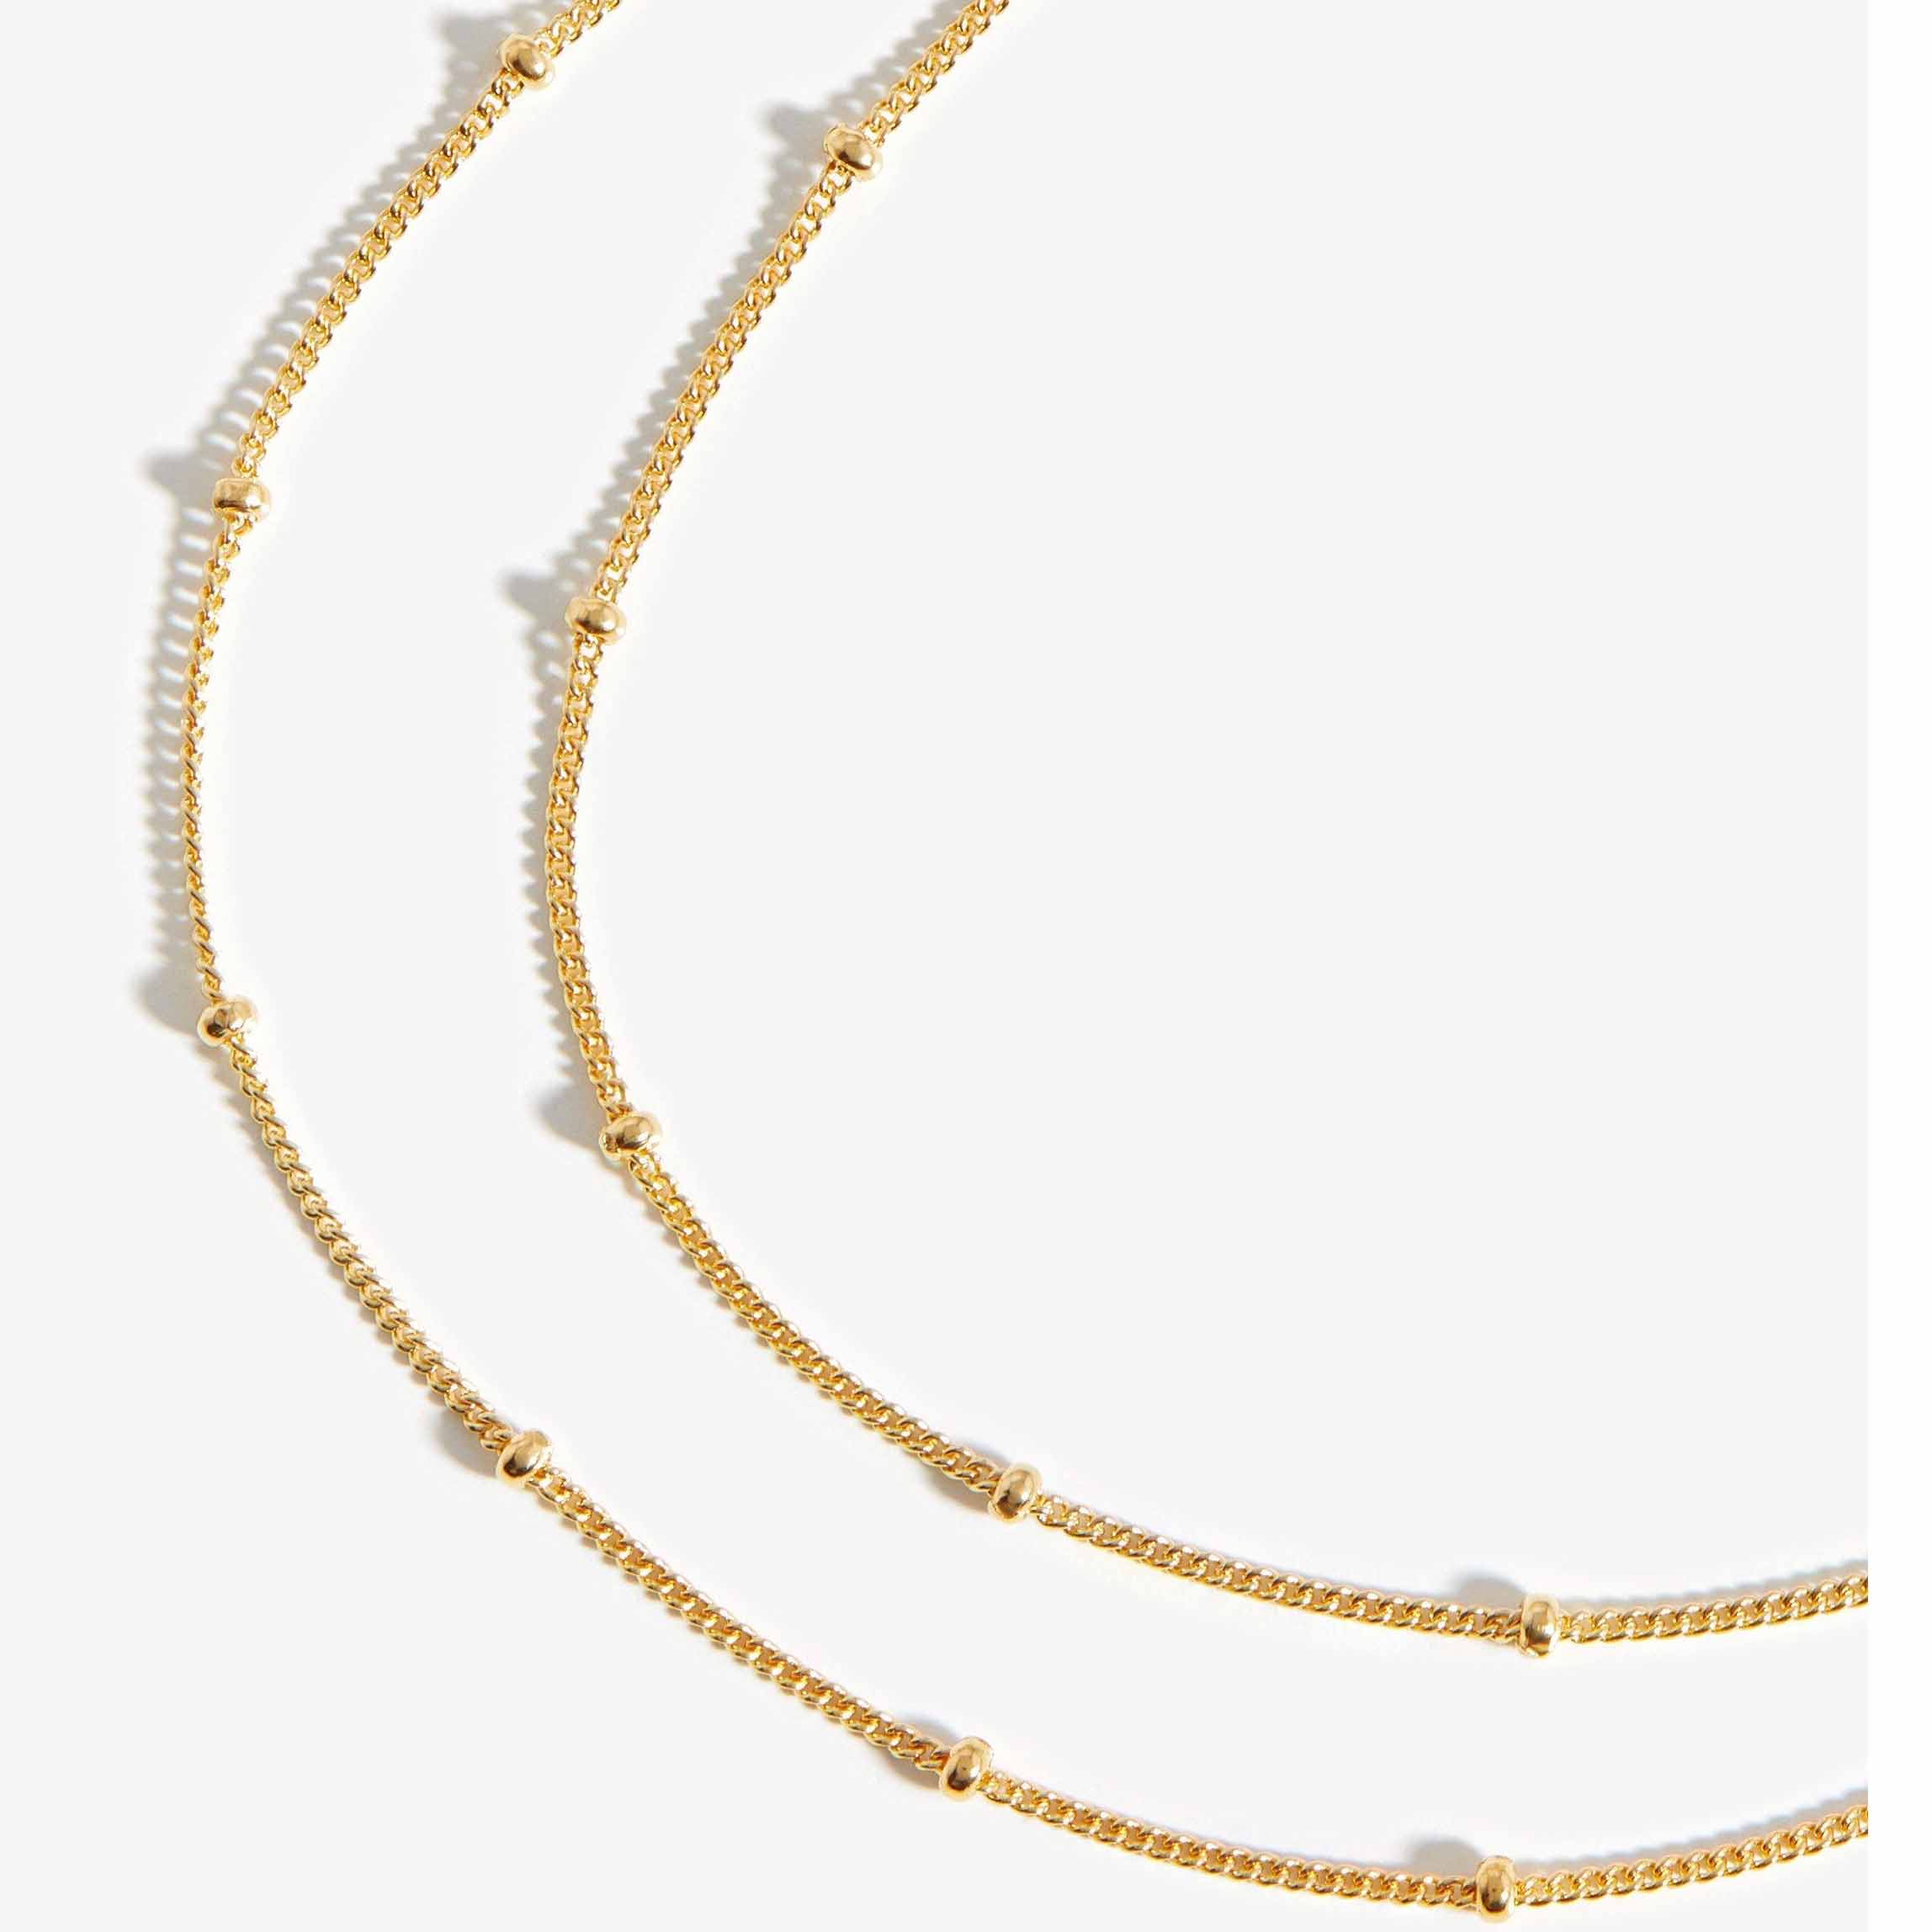 Kenya silver necklace wholesale custom short bobble chain necklaces